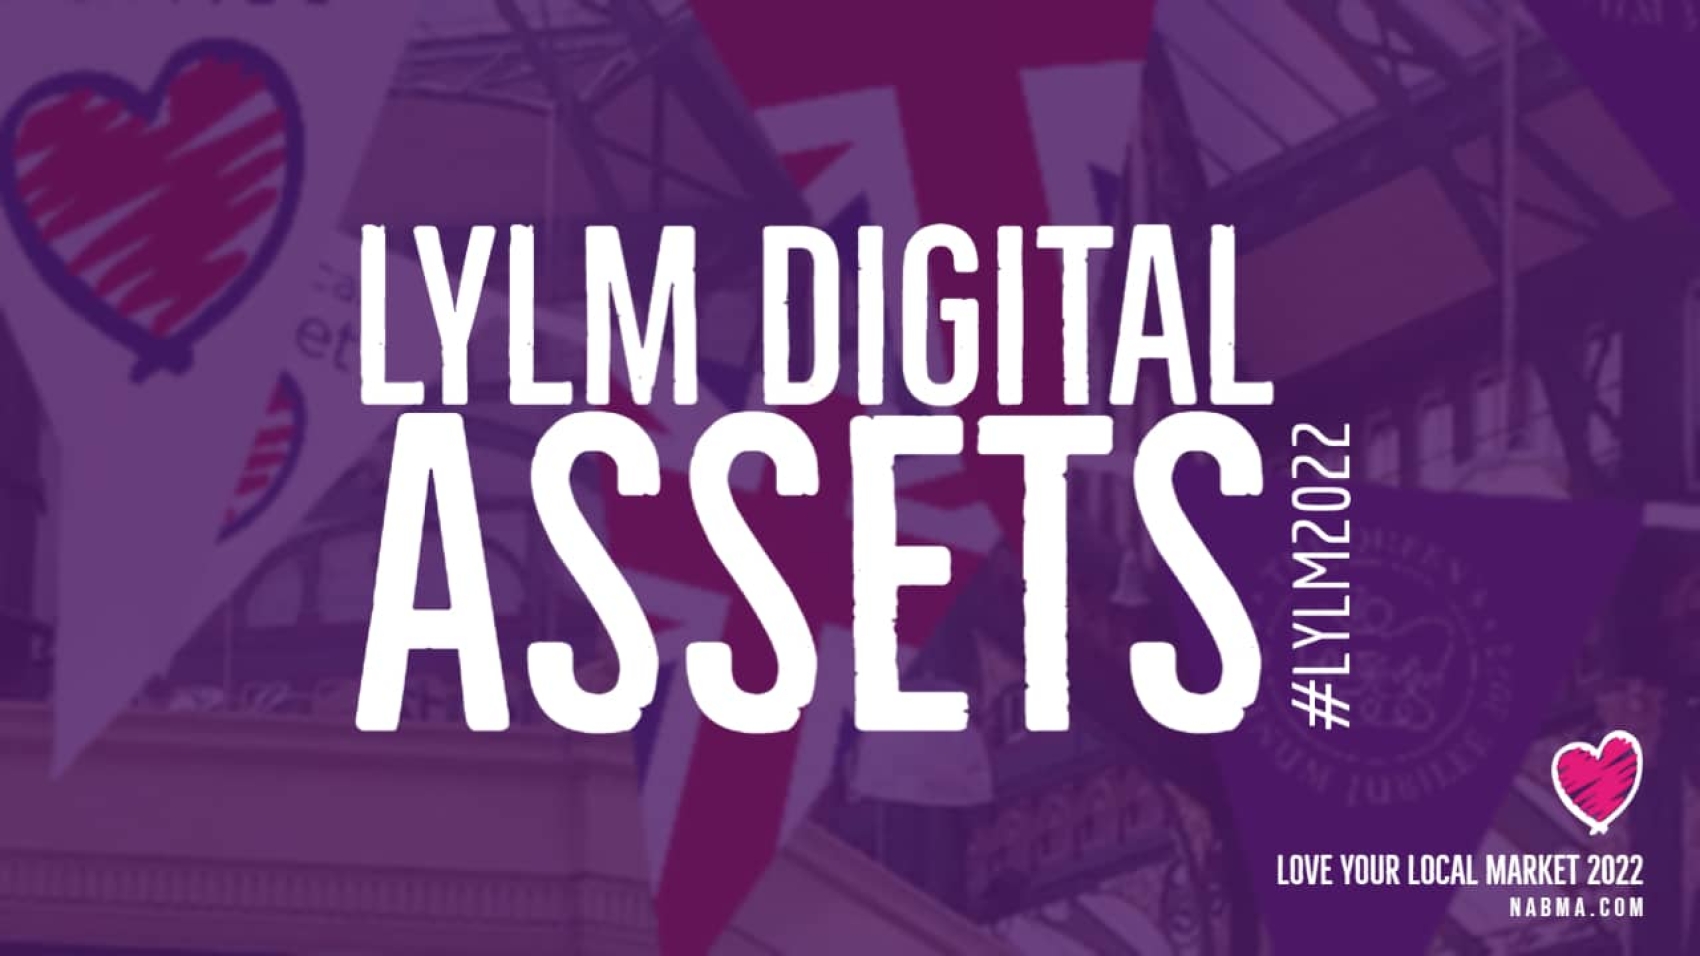 LYLM Digital Assets